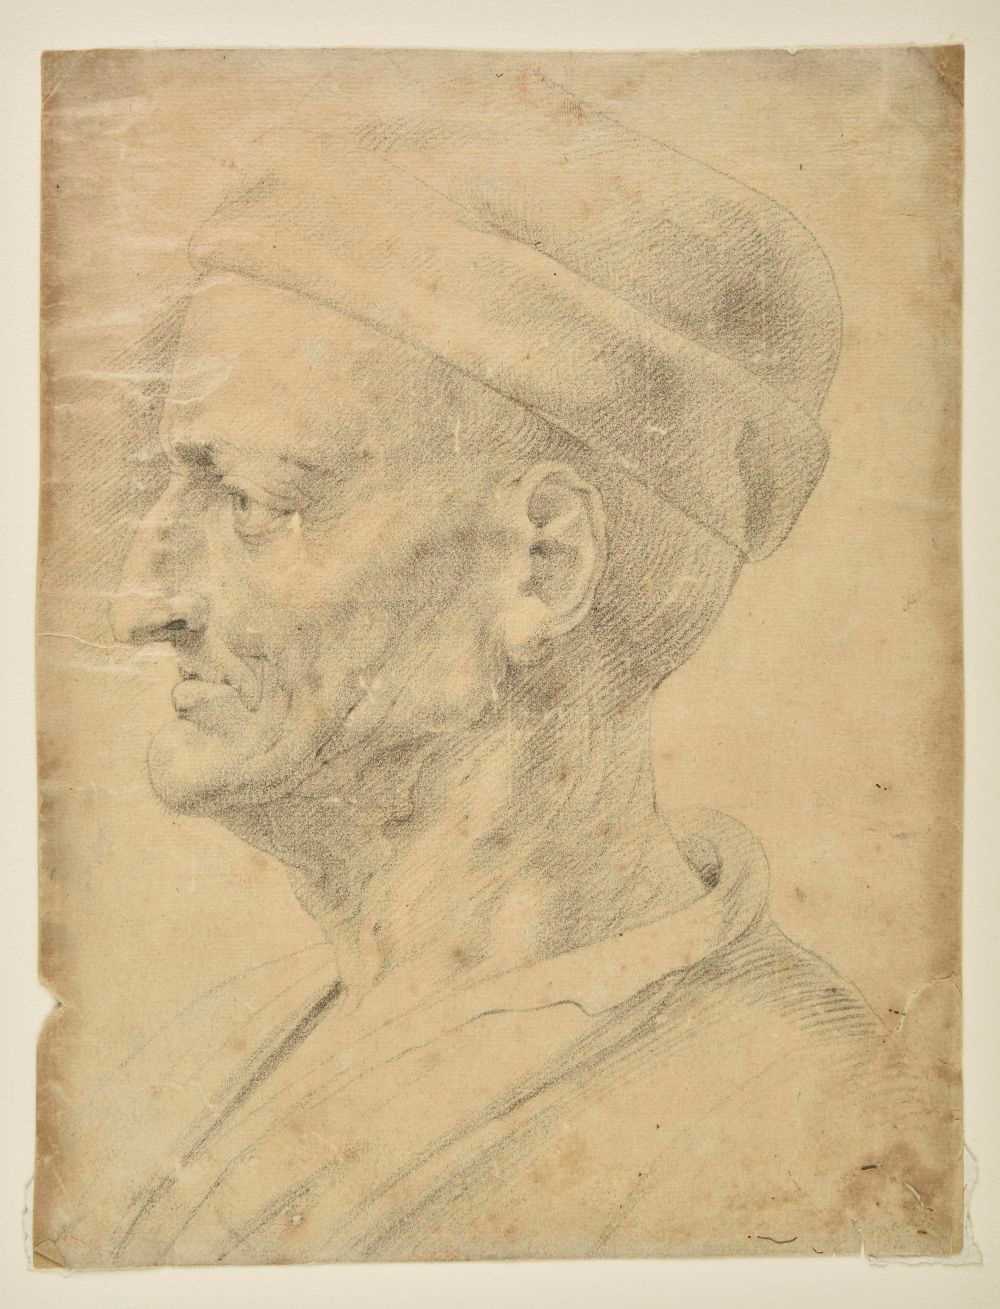 Lot 261 - Rubens, Circle of. Portrait of an Old Man, black chalk